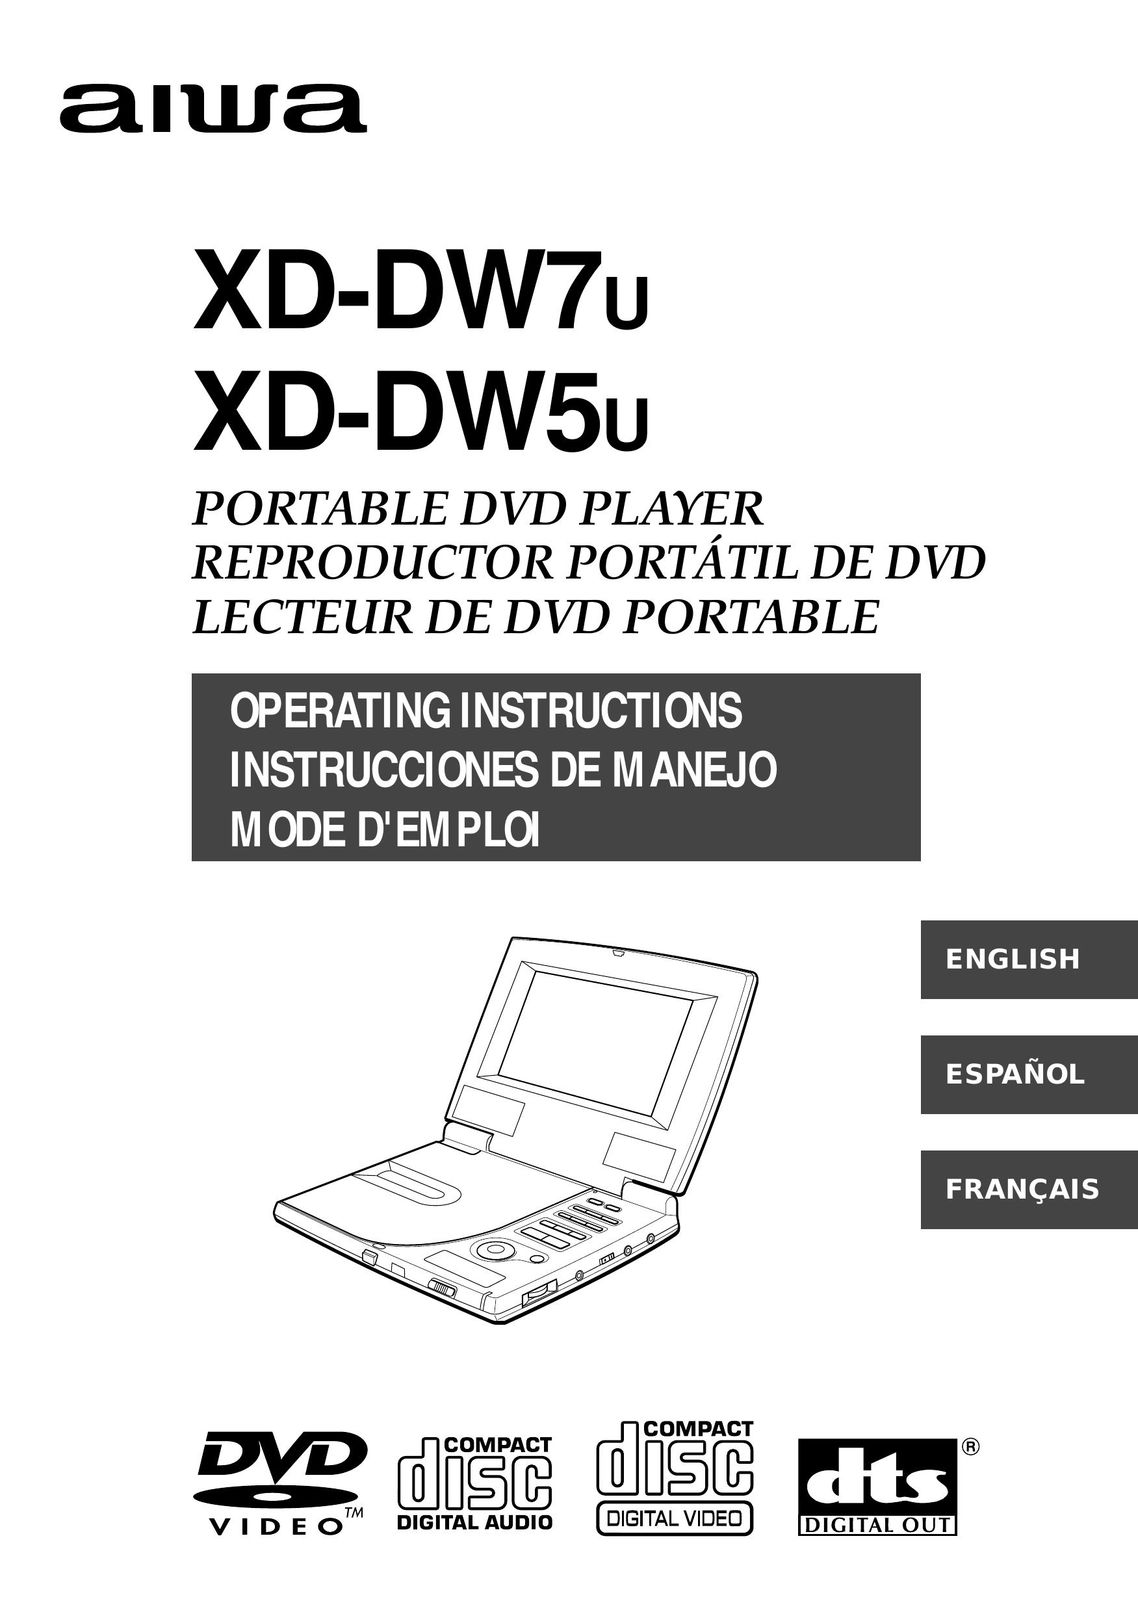 Aiwa XD-DW7U DVD Player User Manual